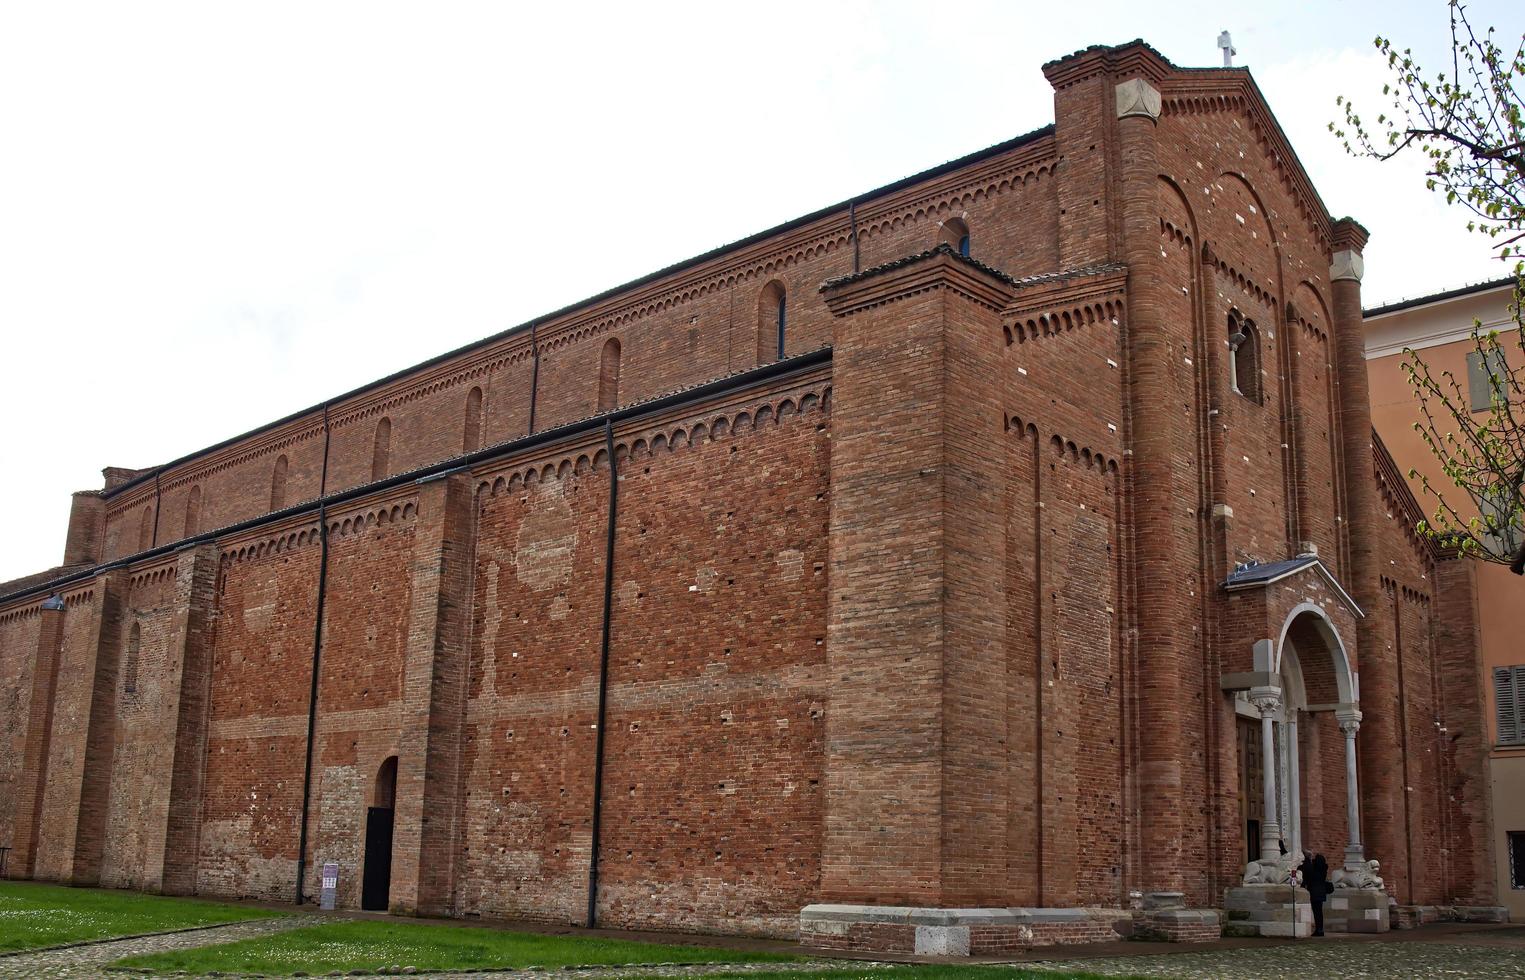 Famous medieval Abbey of Nonantola, Abbazia di Nonantola. Modena. Italy photo